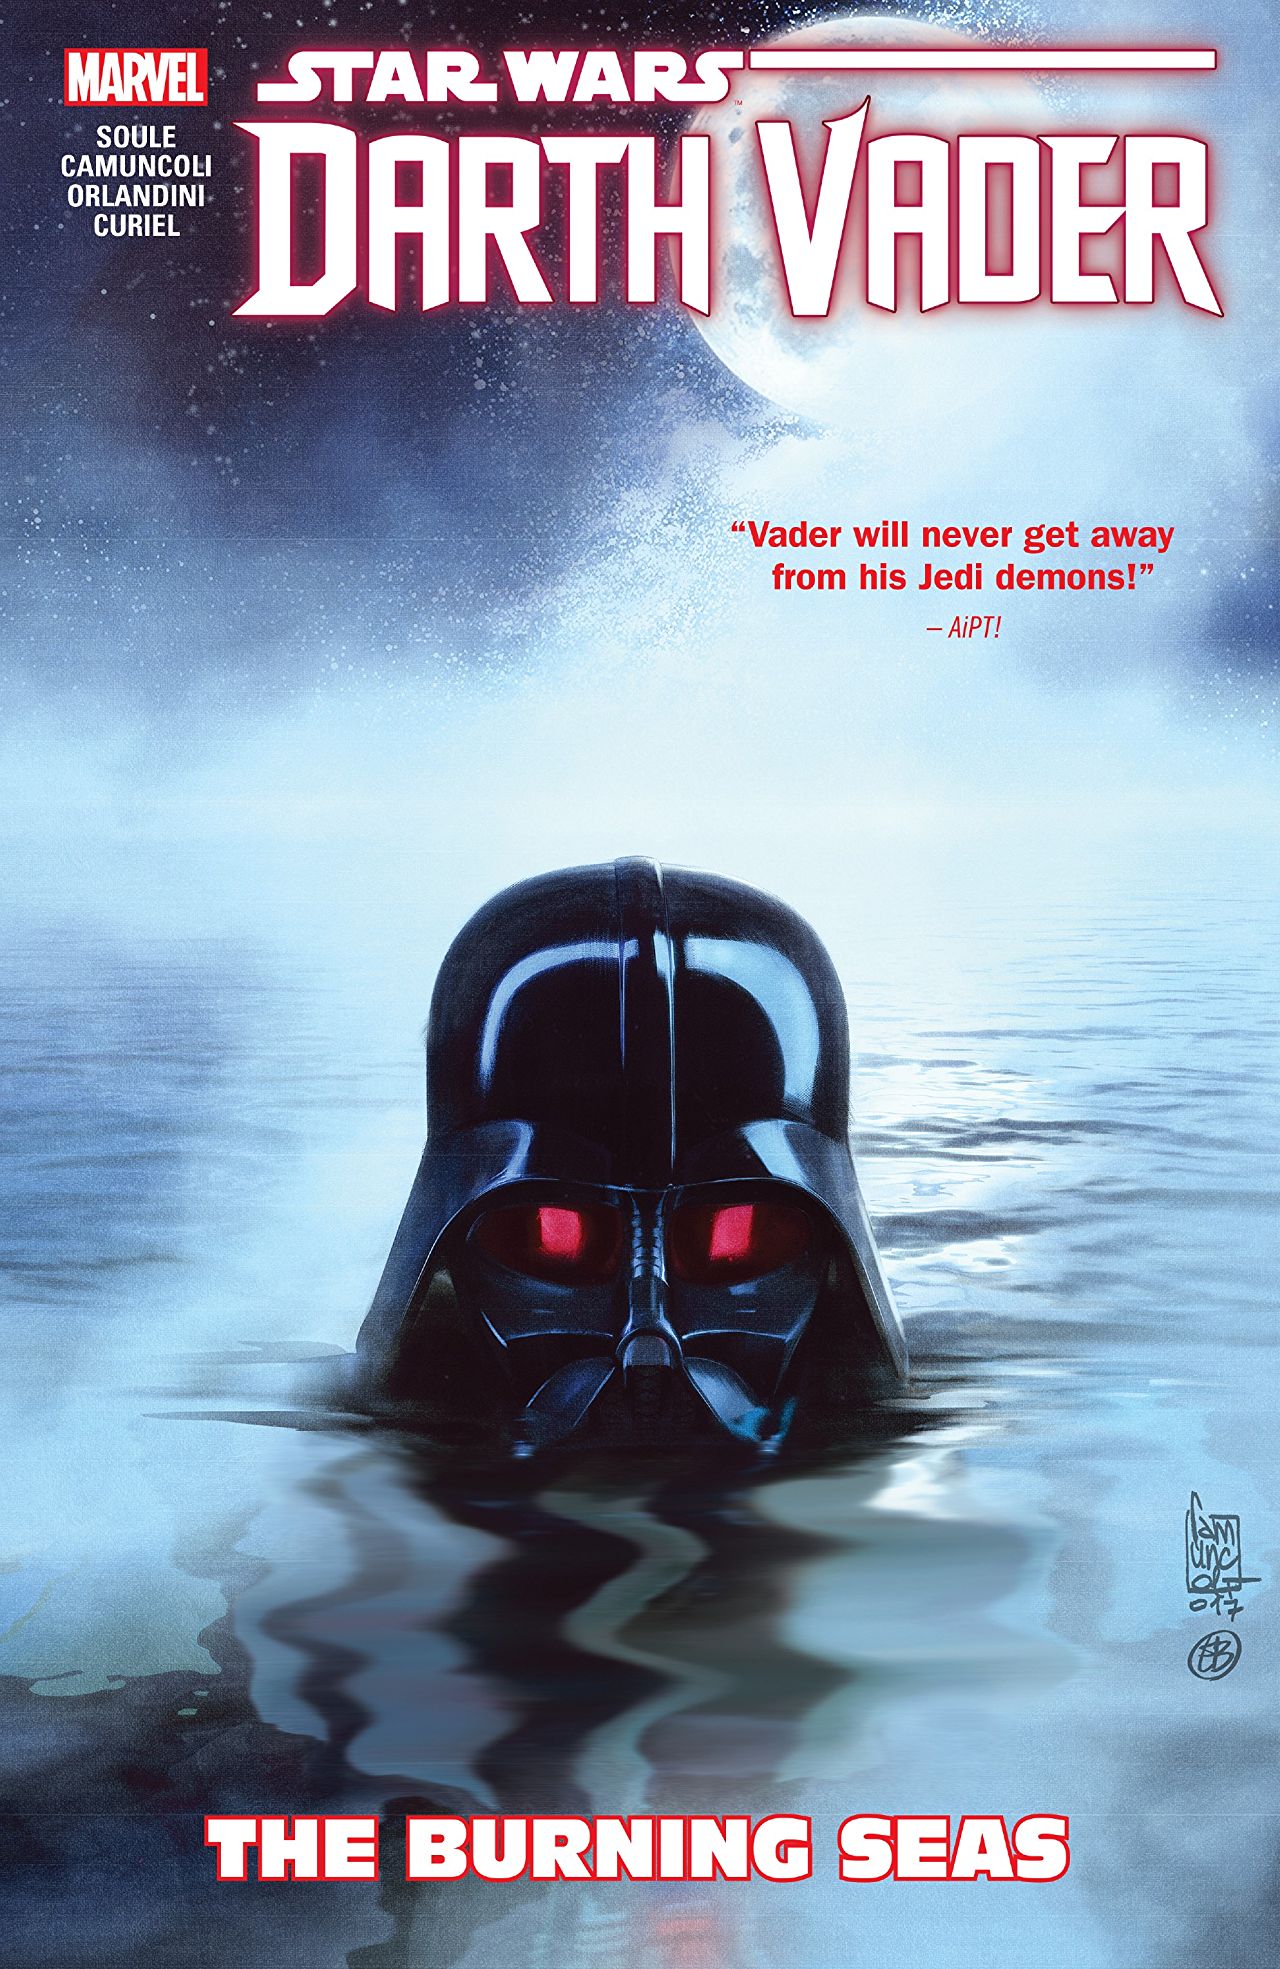 Star Wars: Darth Vader: Dark Lord of the Sith Vol. 3: The Burning Seas Review